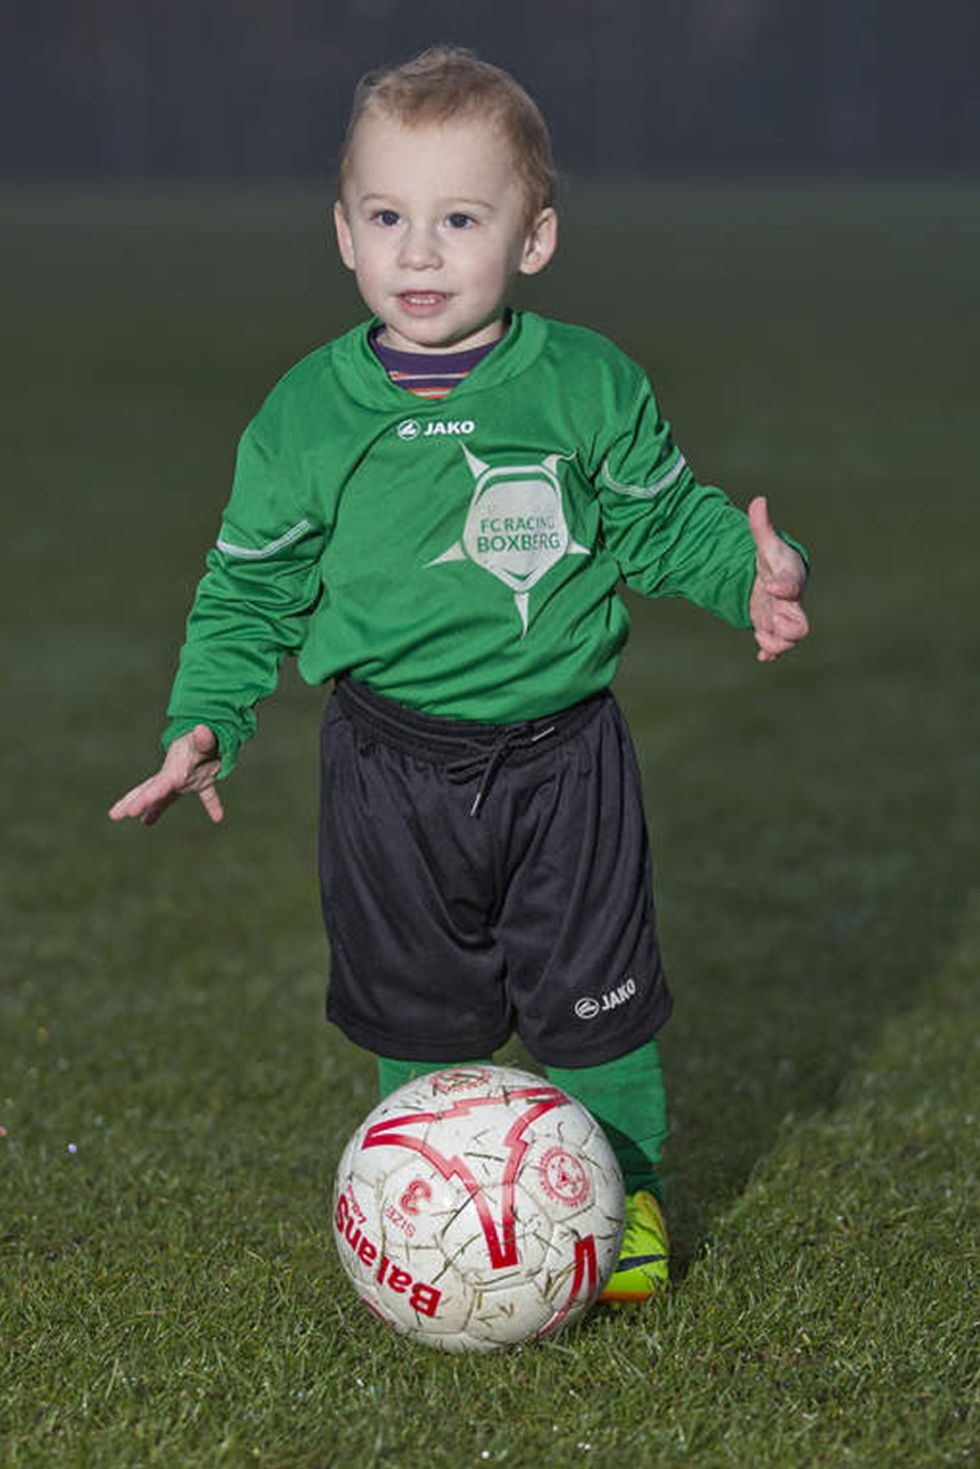 Un club de fútbol belga ficha a un niño de ¡20 meses!